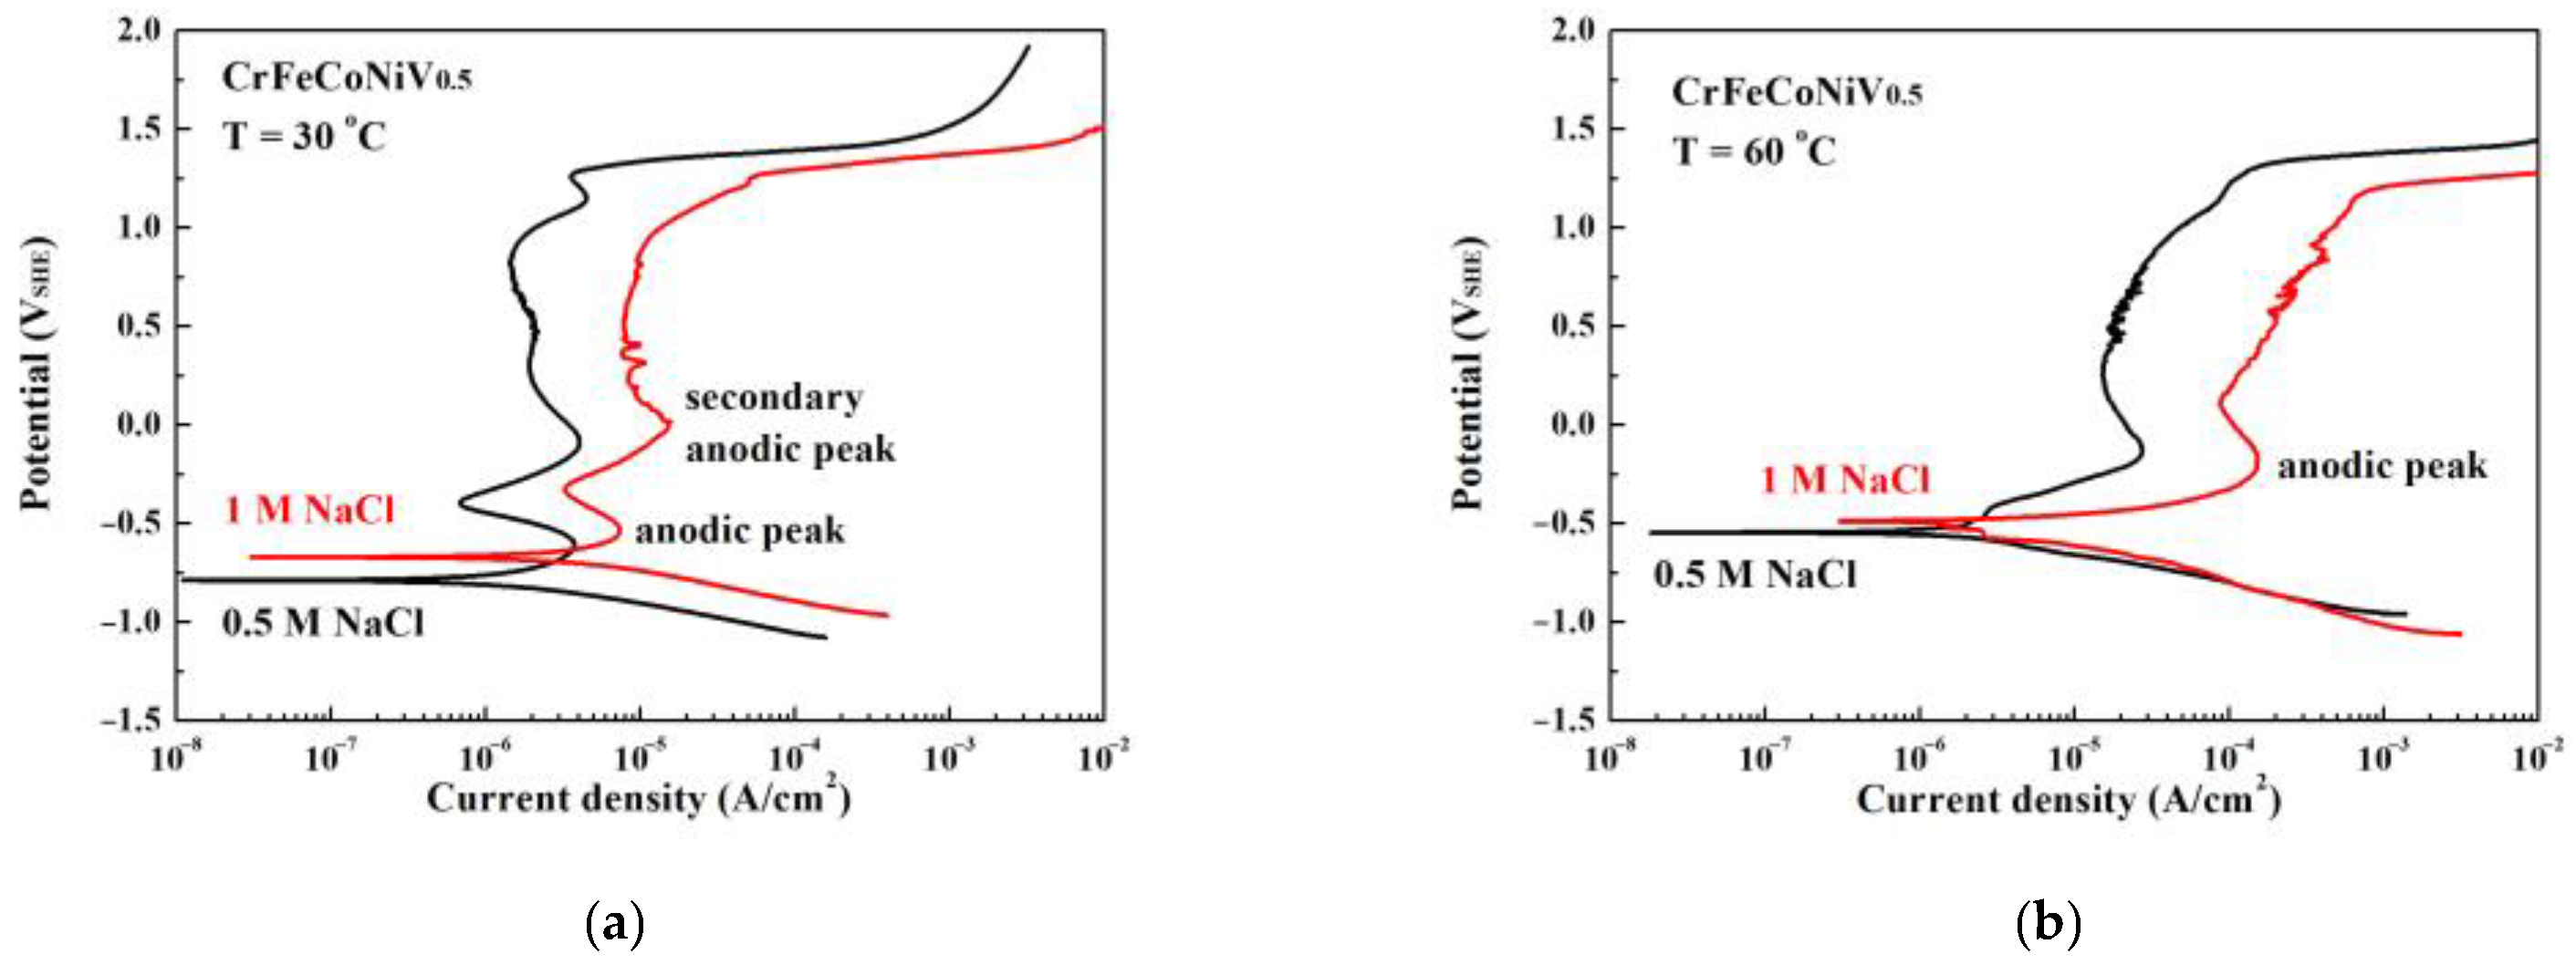 Potentiodynamic polarization curves measured in 0.5 M NaCl for